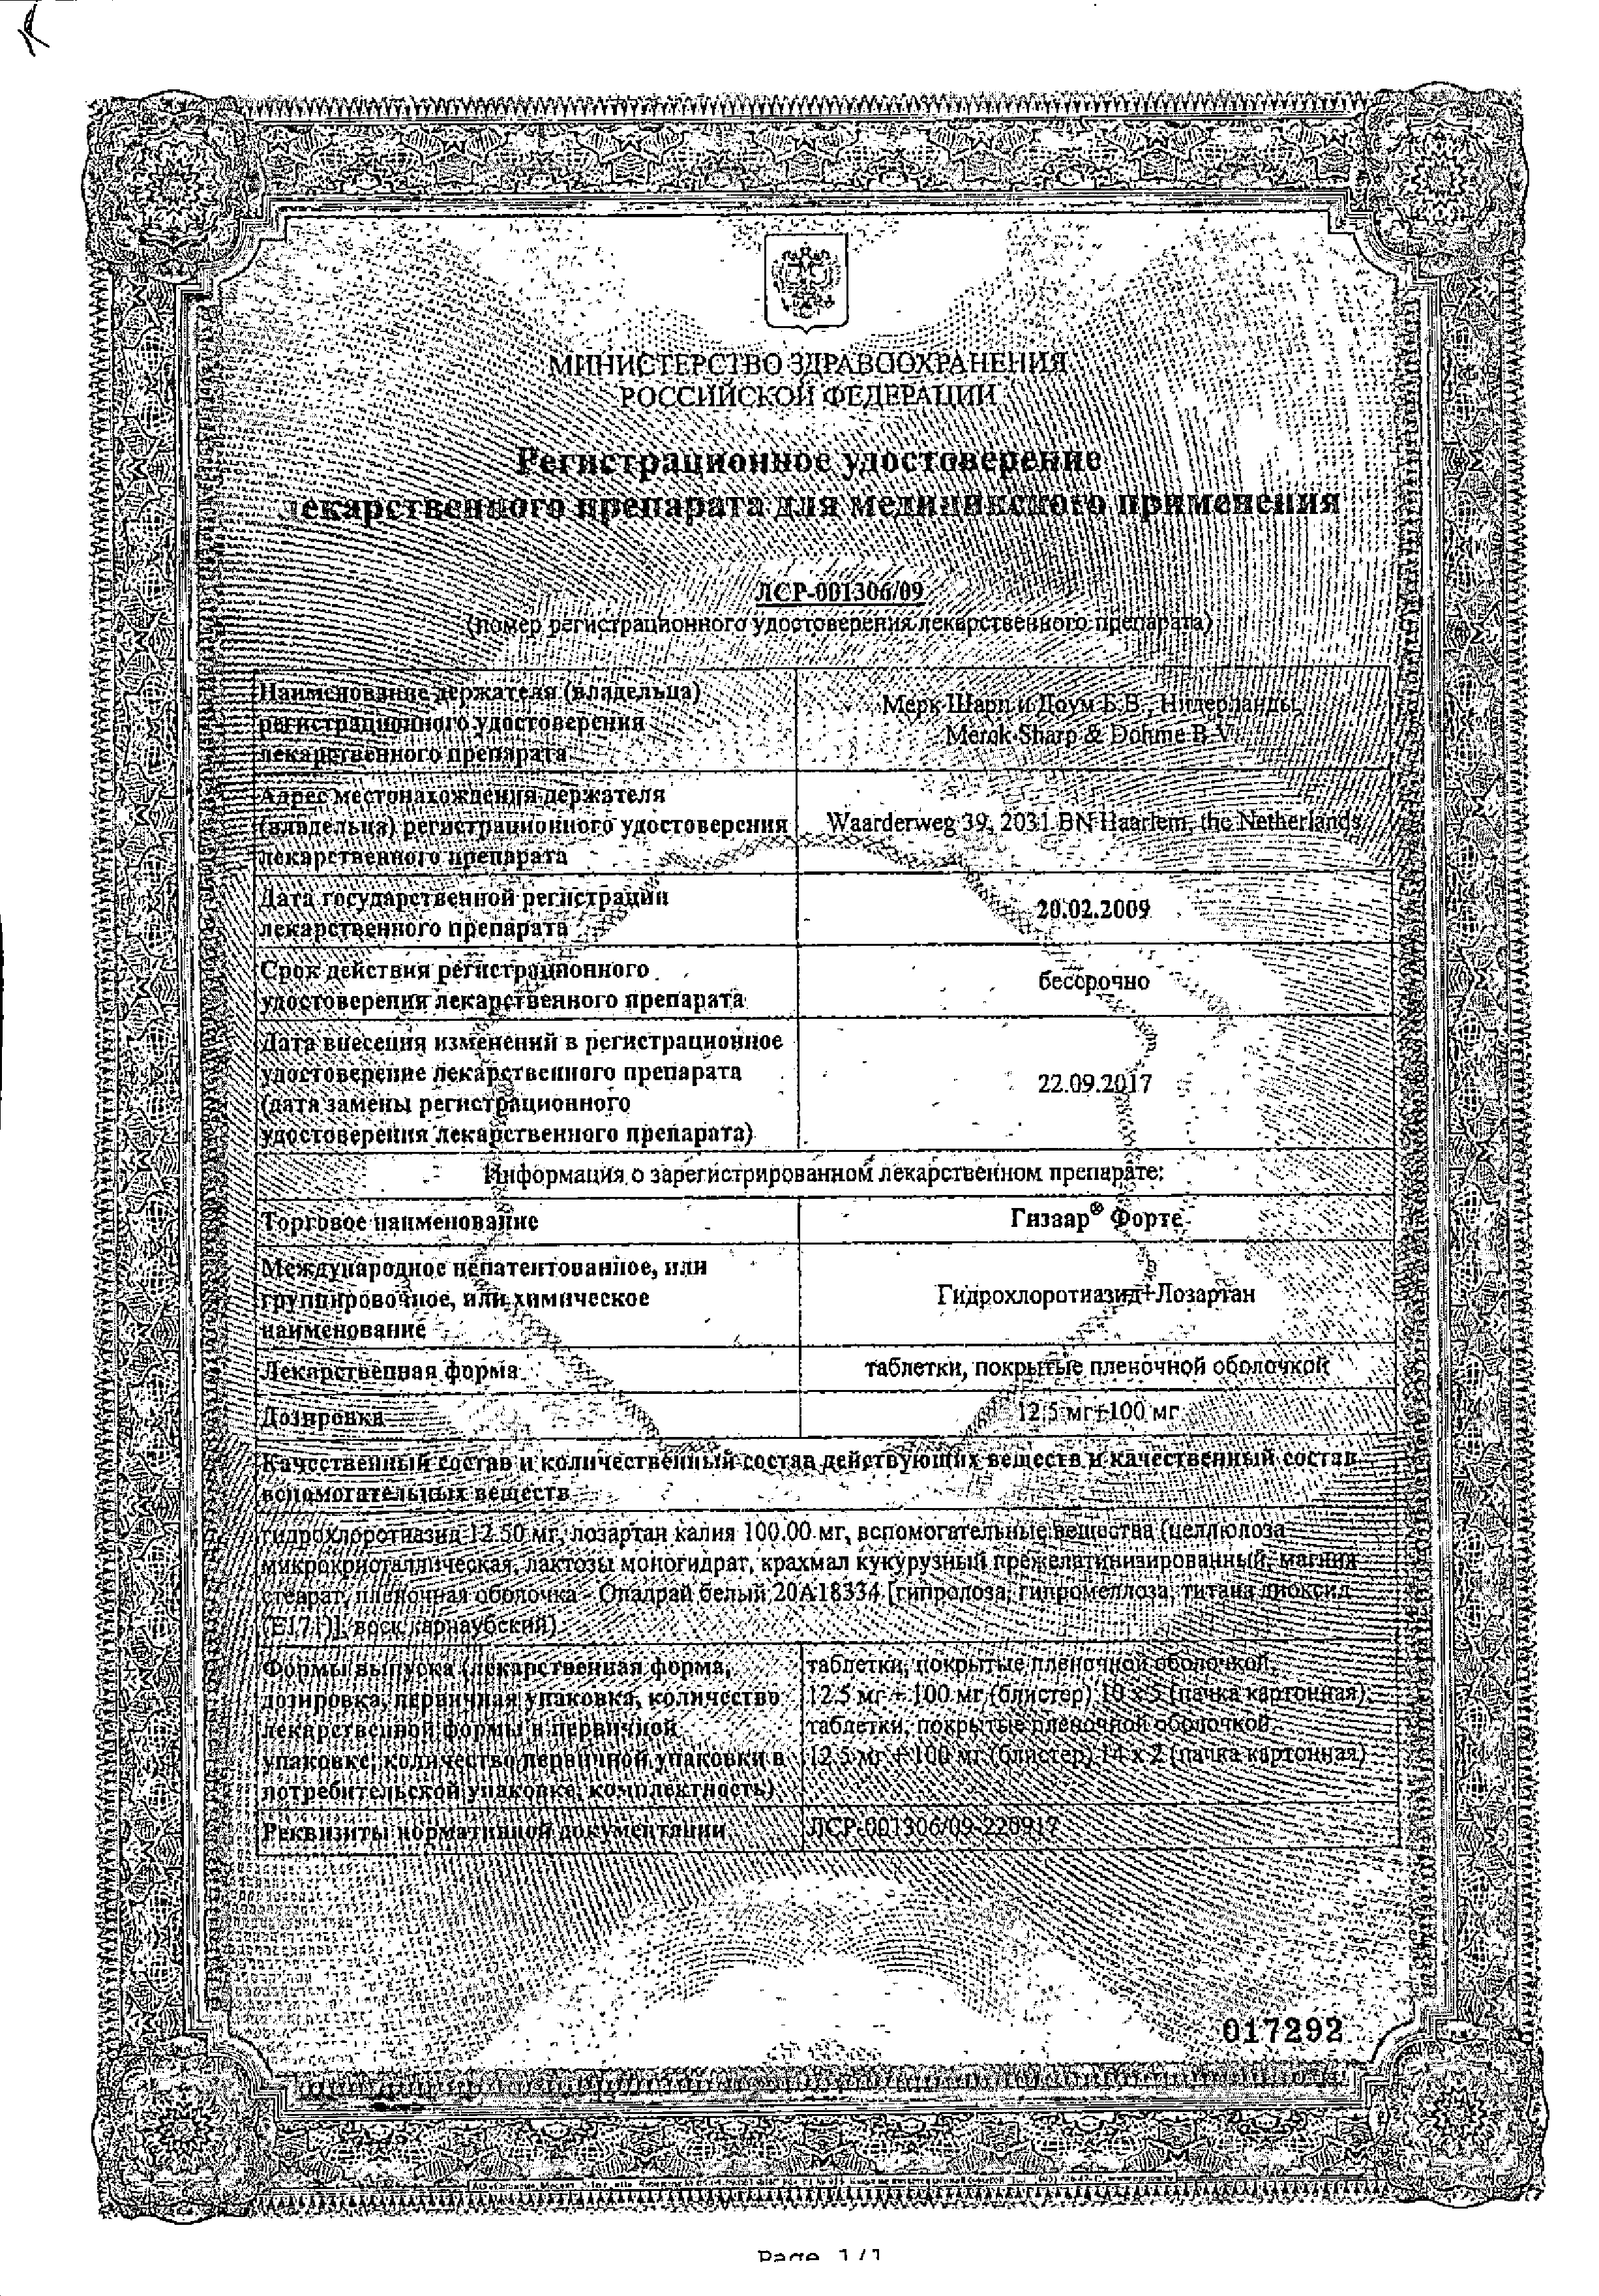 Гизаар Форте сертификат